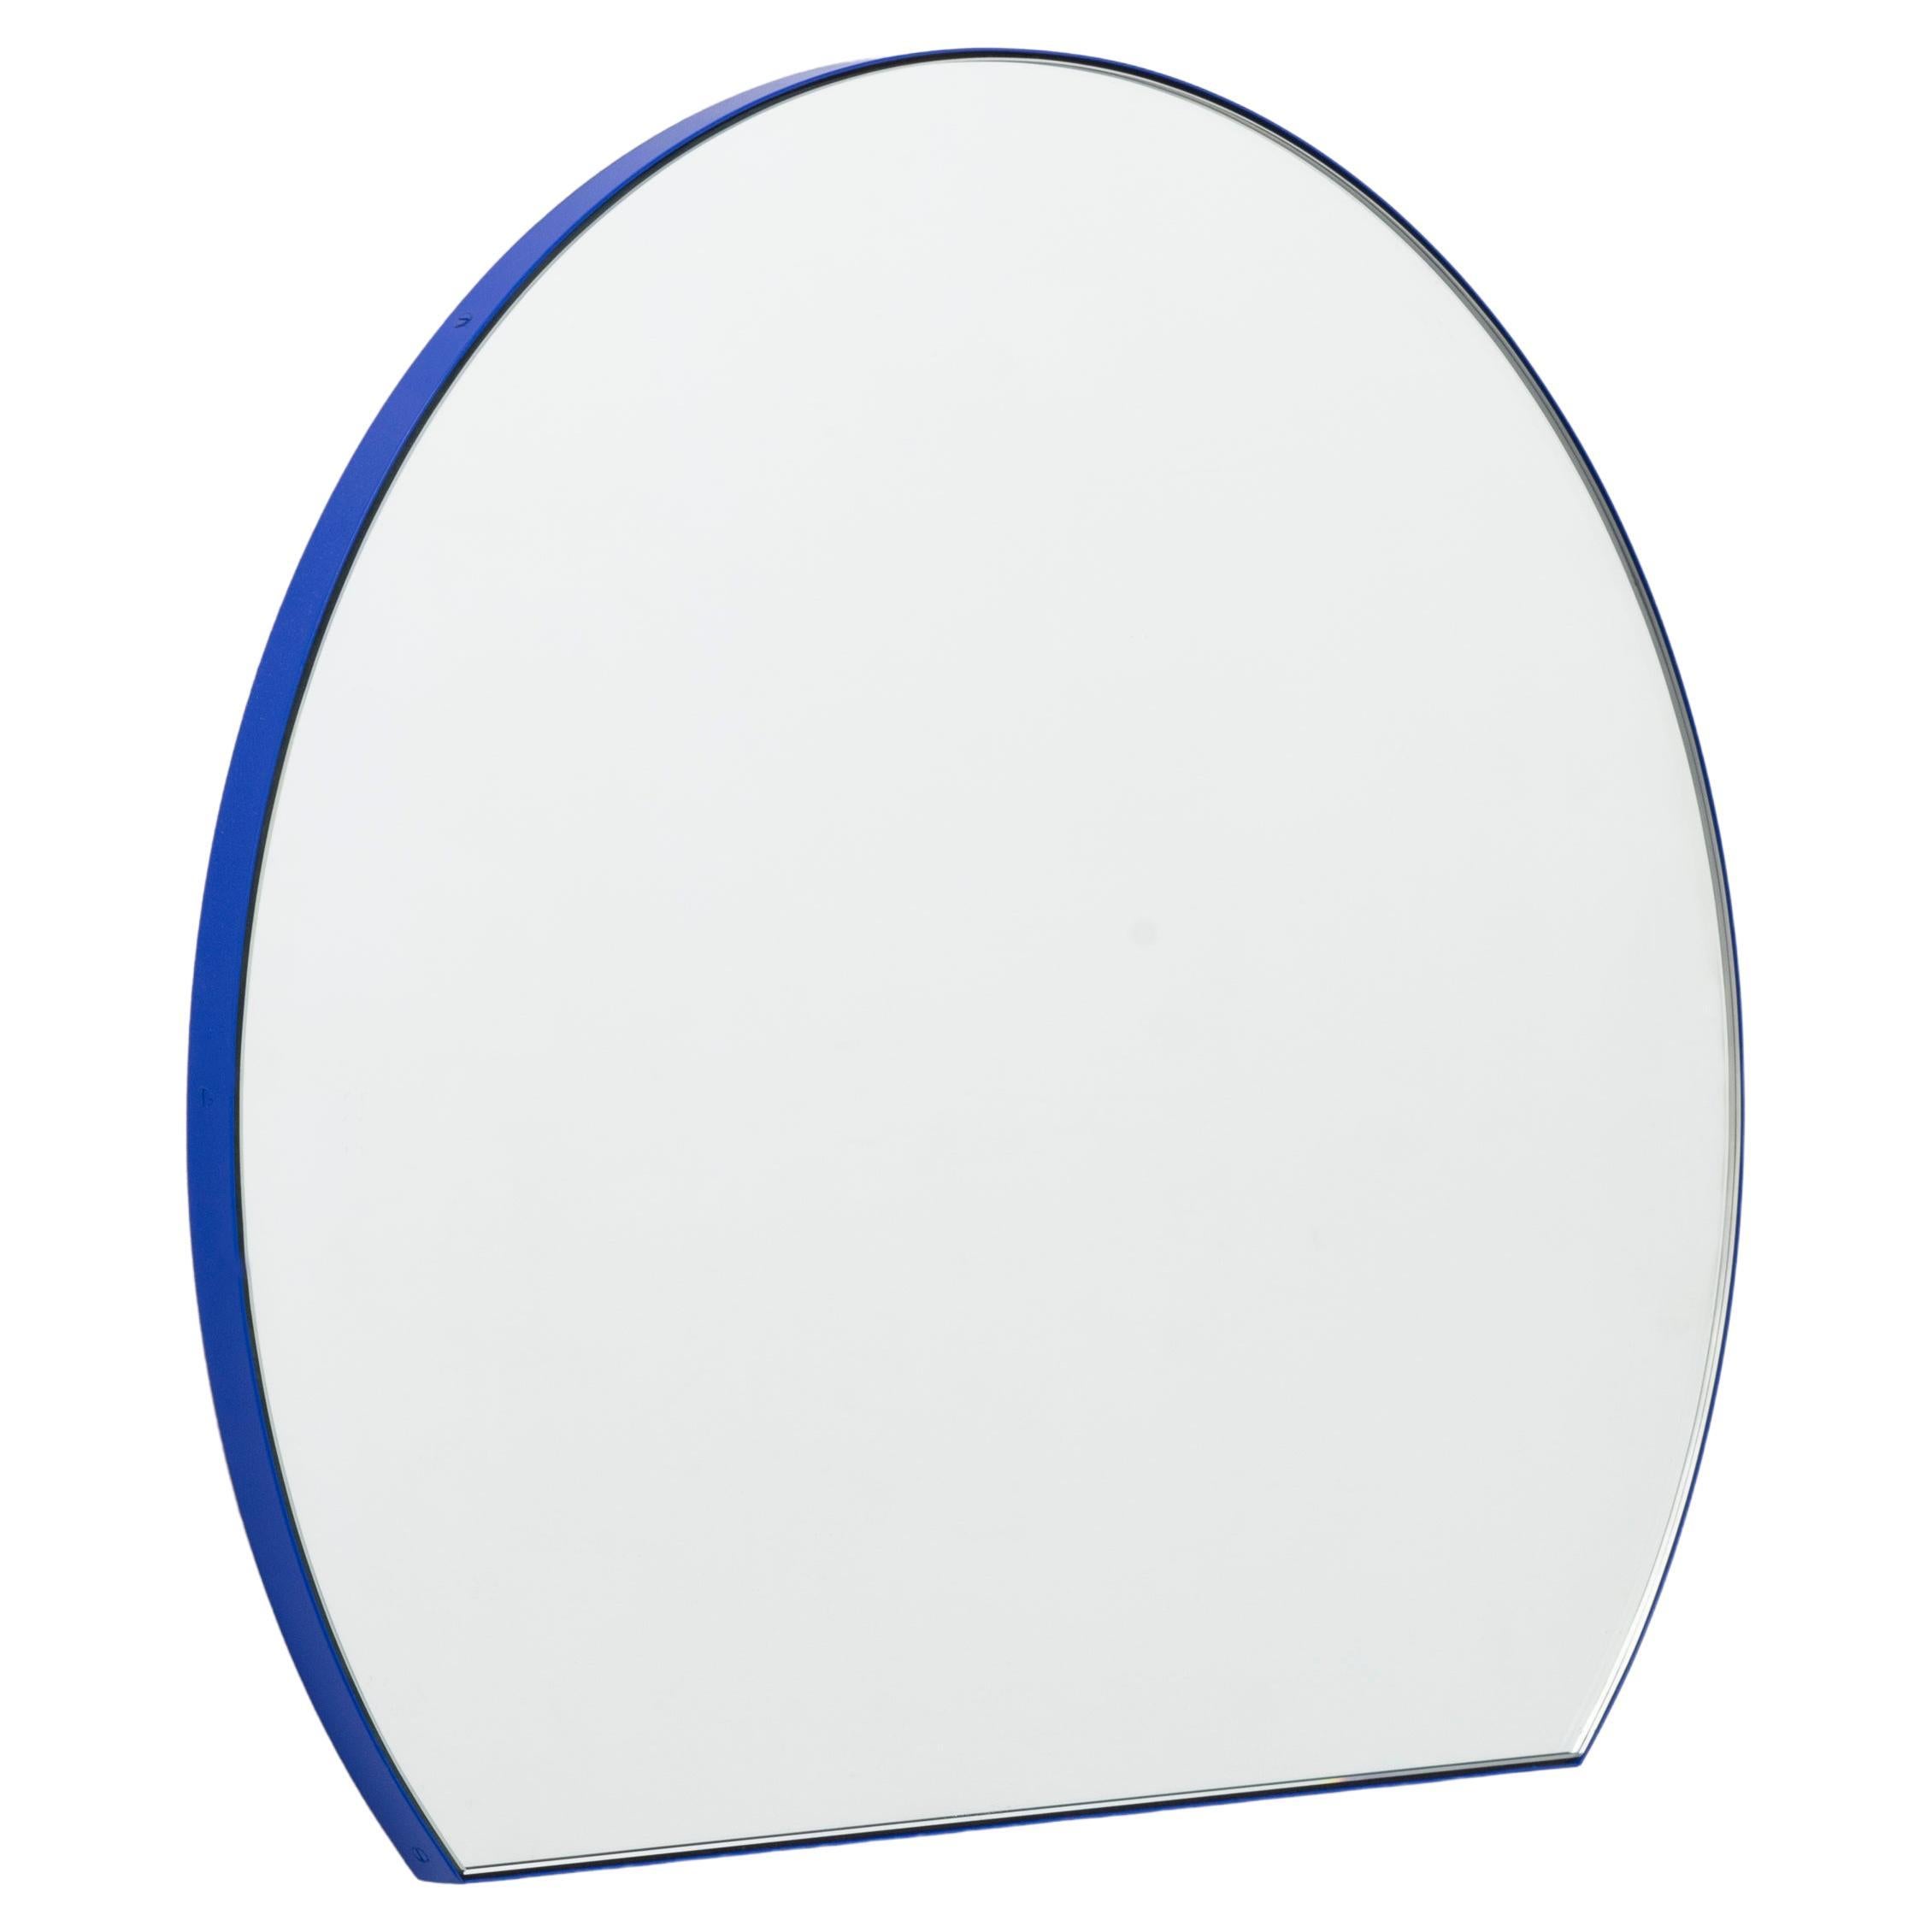 Orbis Trecus Cropped Round Modern Mirror with Blue Frame, Large